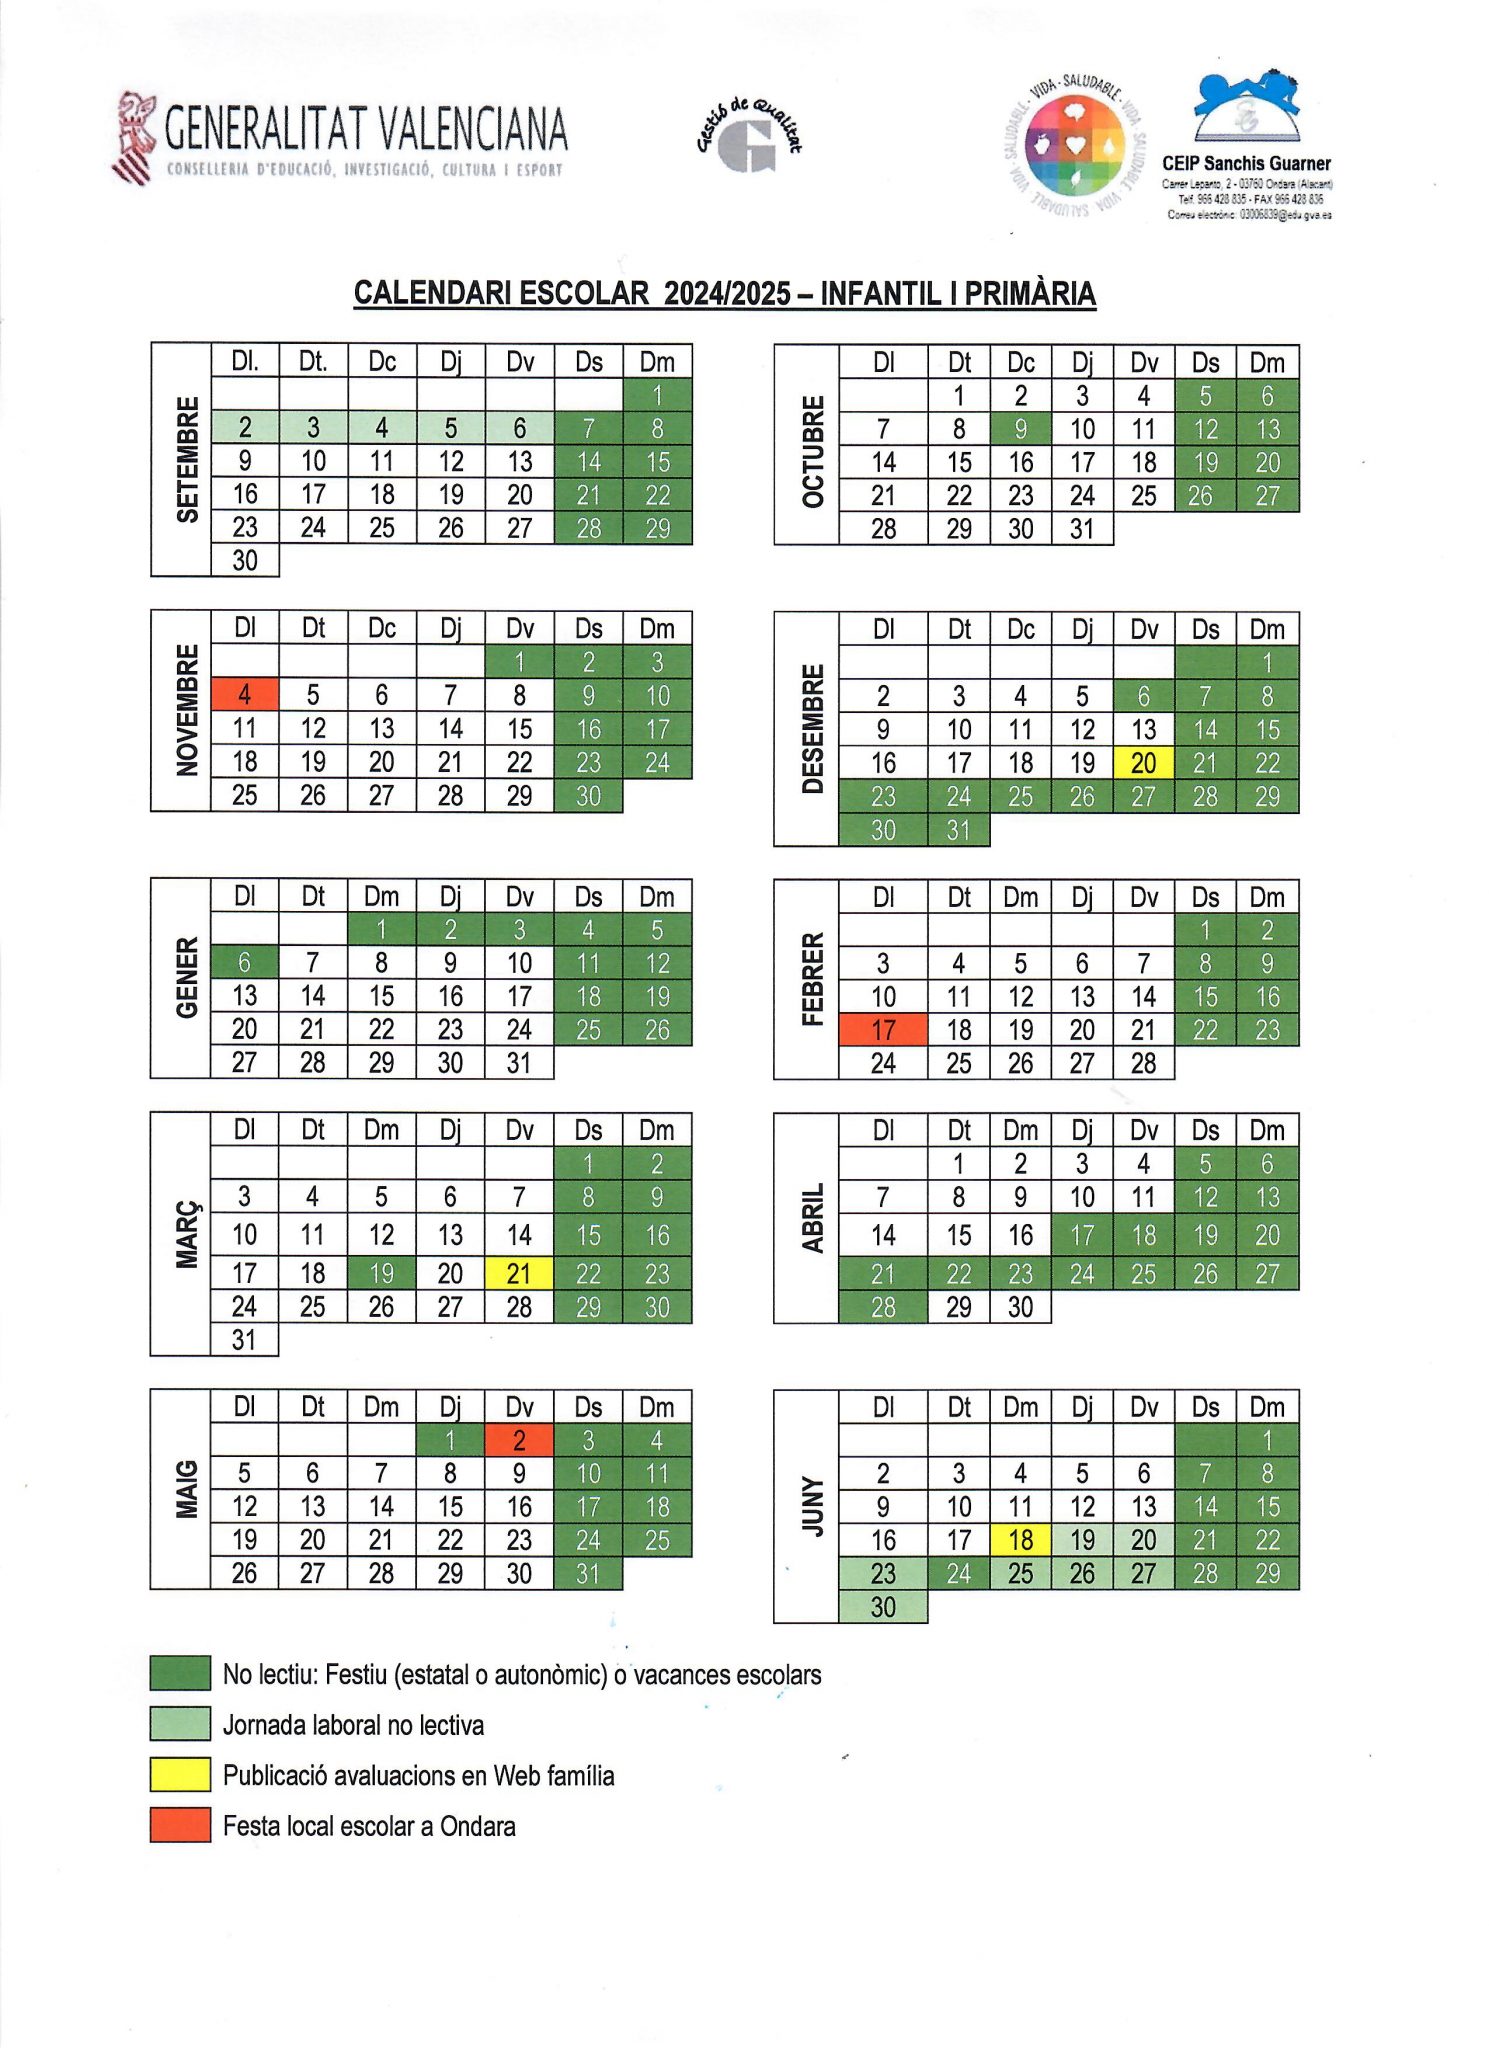 calendari 24-25